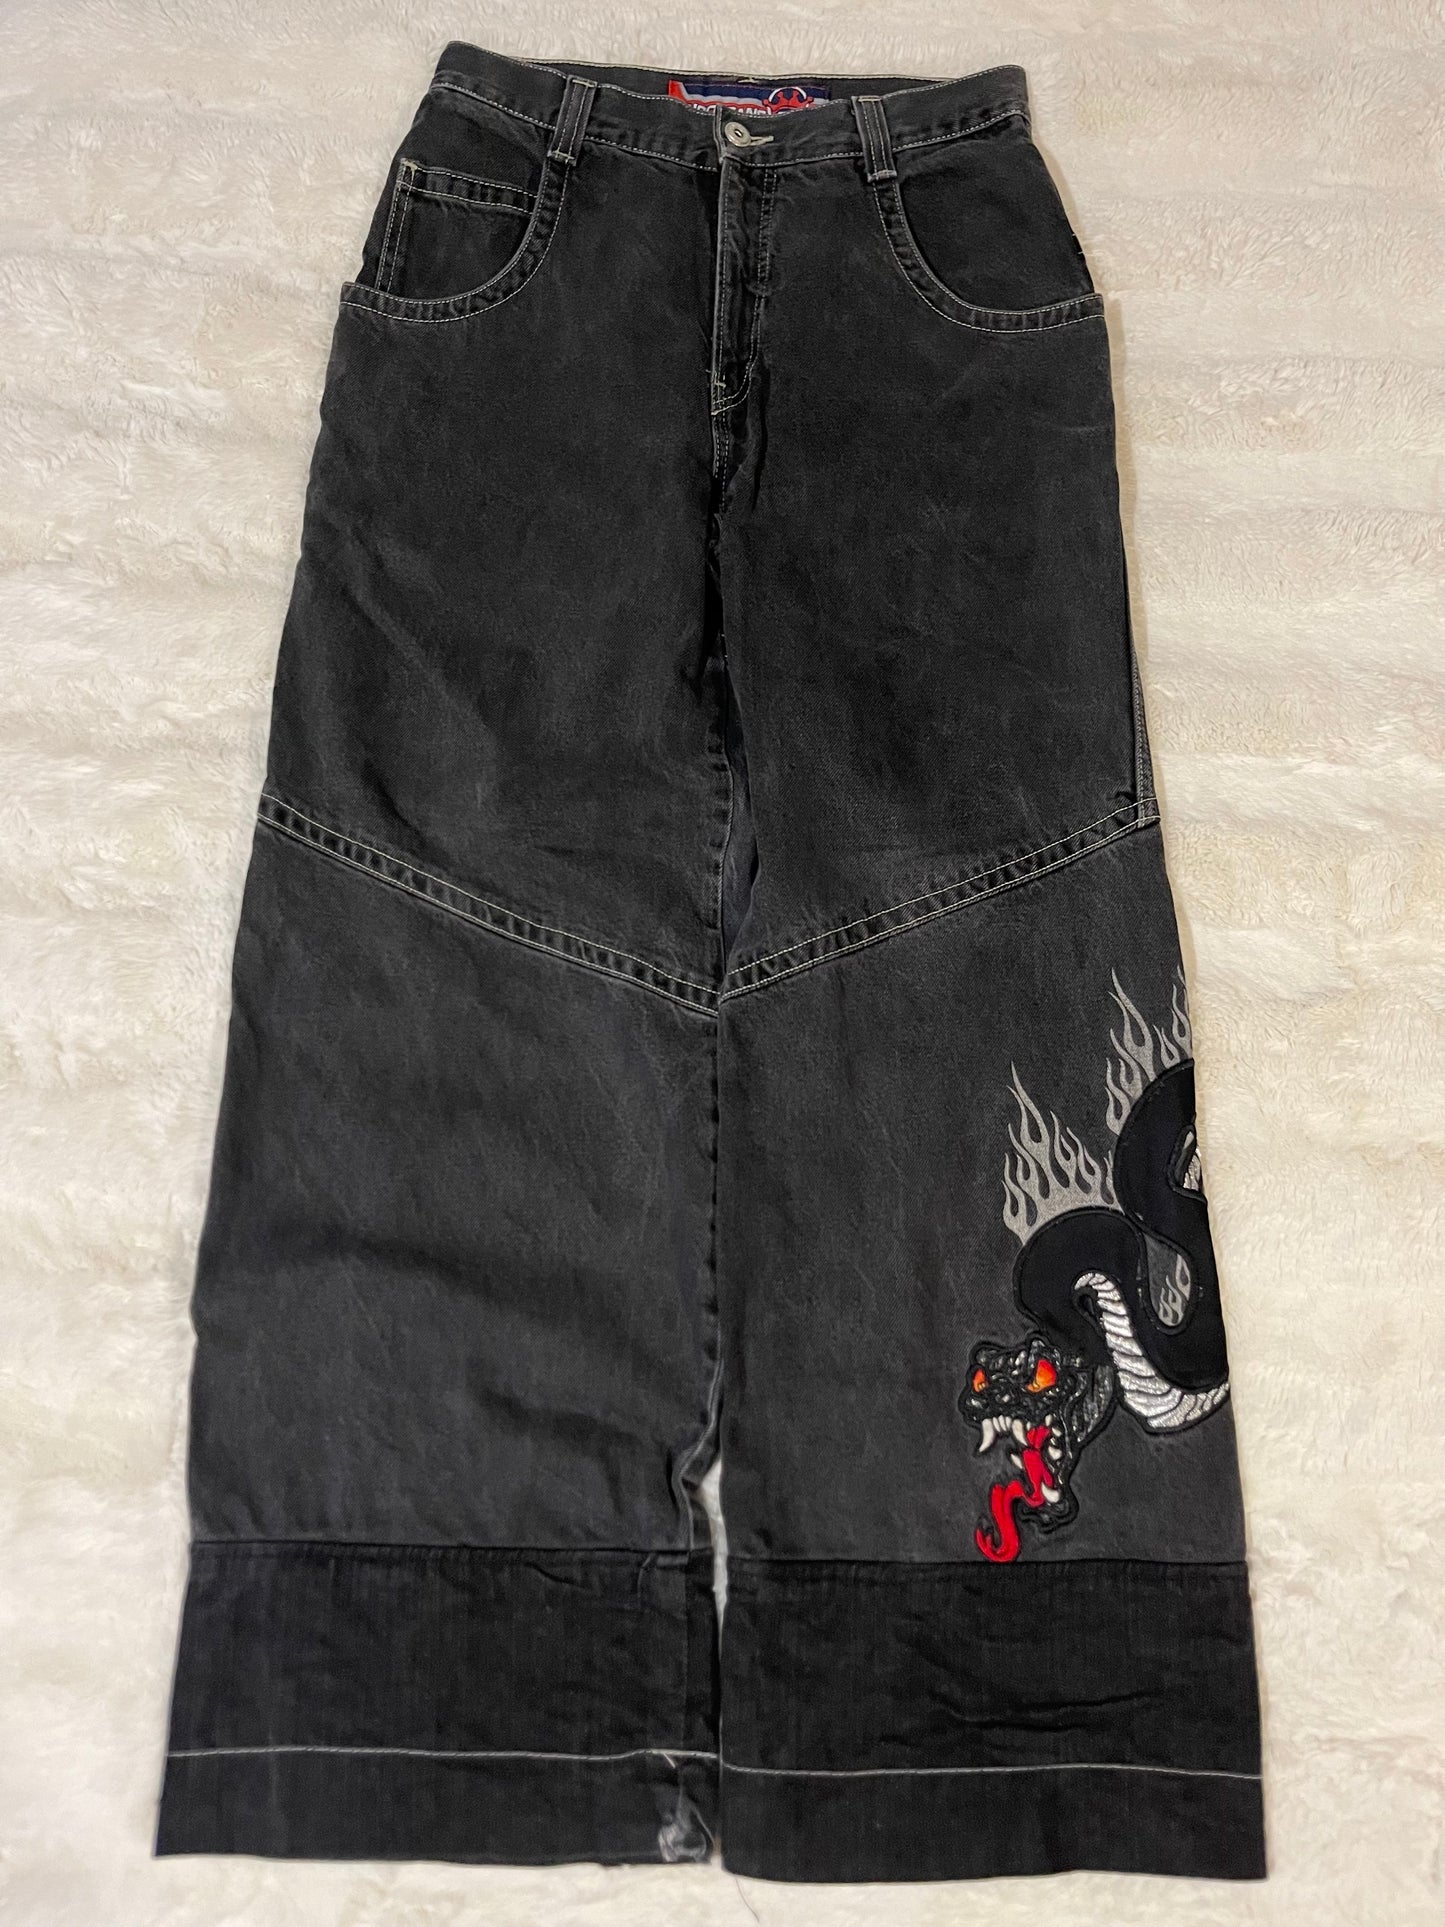 90s JNCO Black Hissing Snake Jeans (32x32)